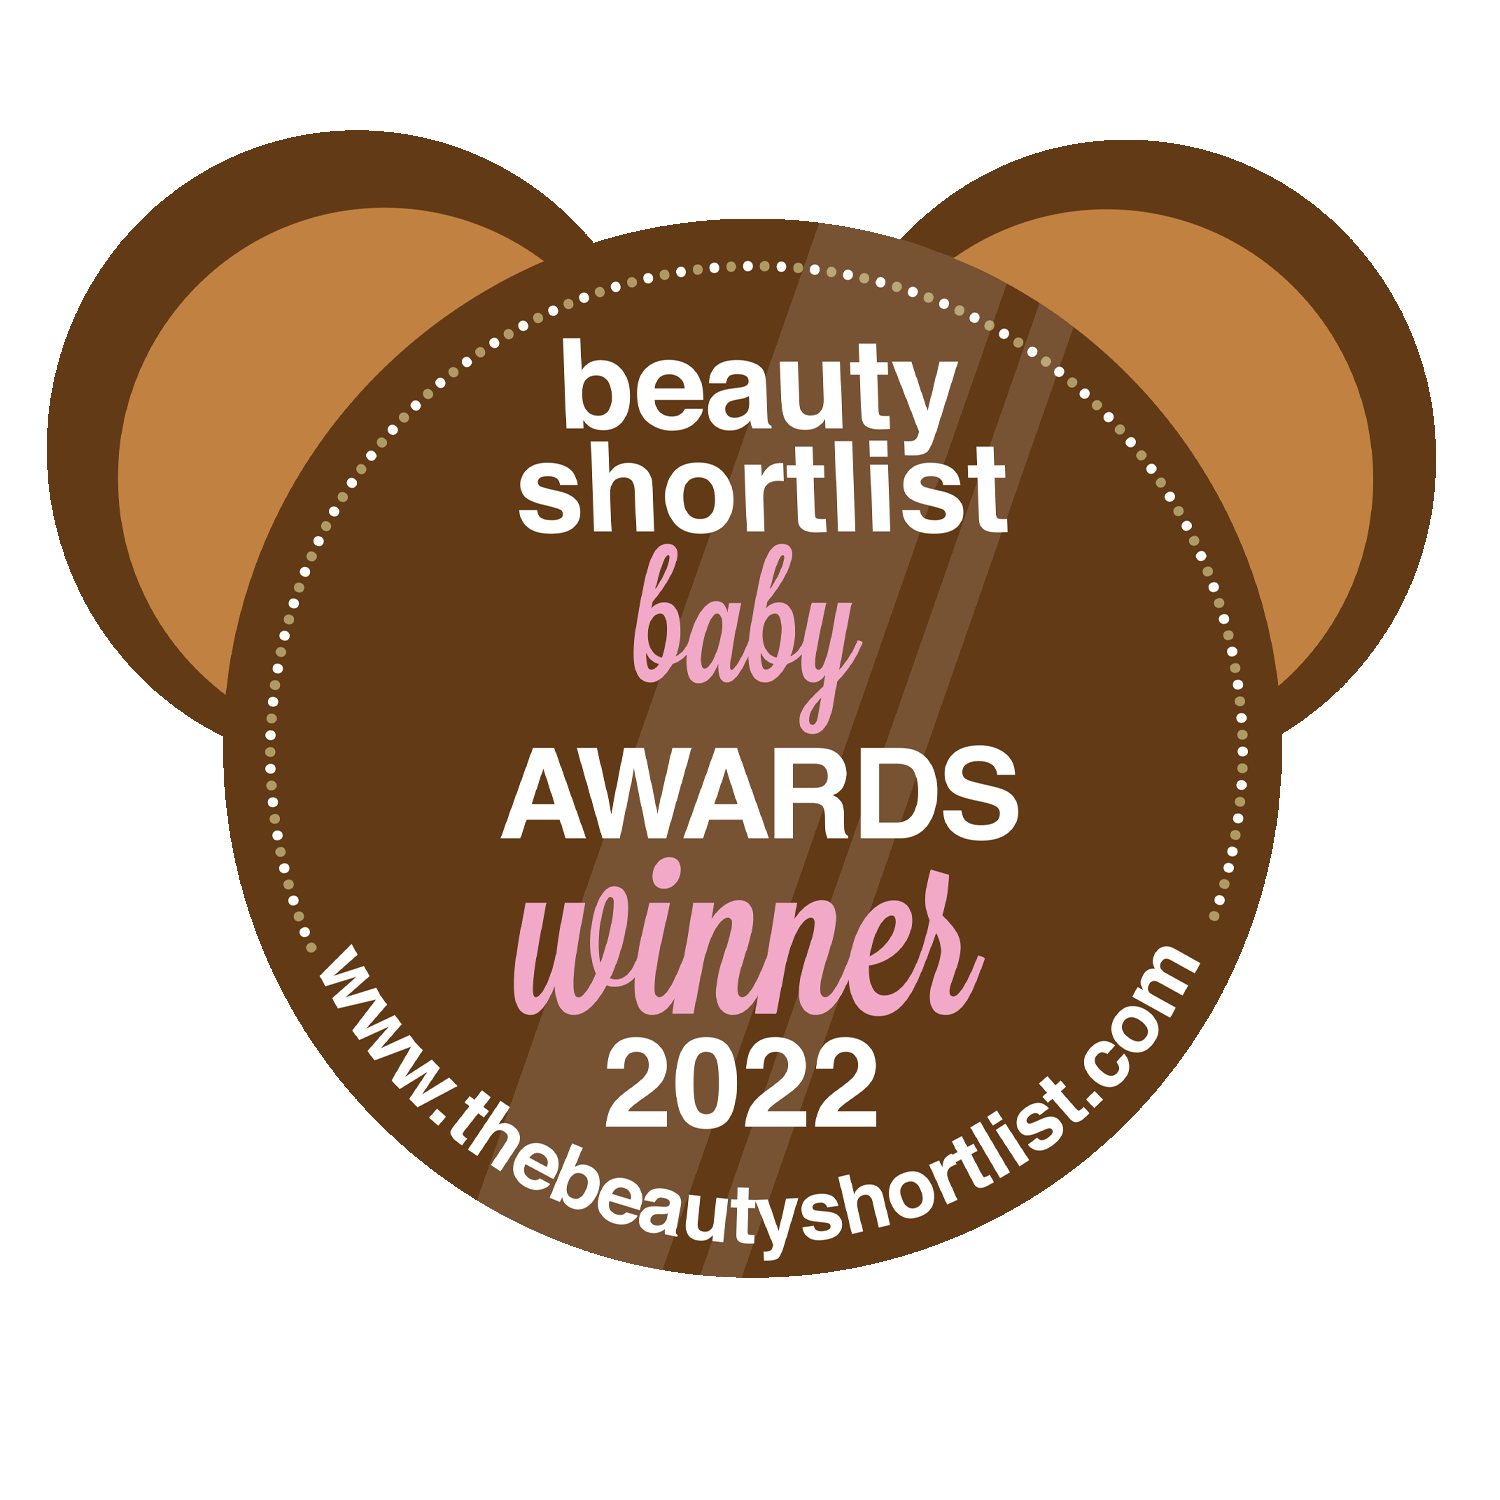 Beauty Shortlist Baby Awards Winner 2022 - The Universal Soul Company